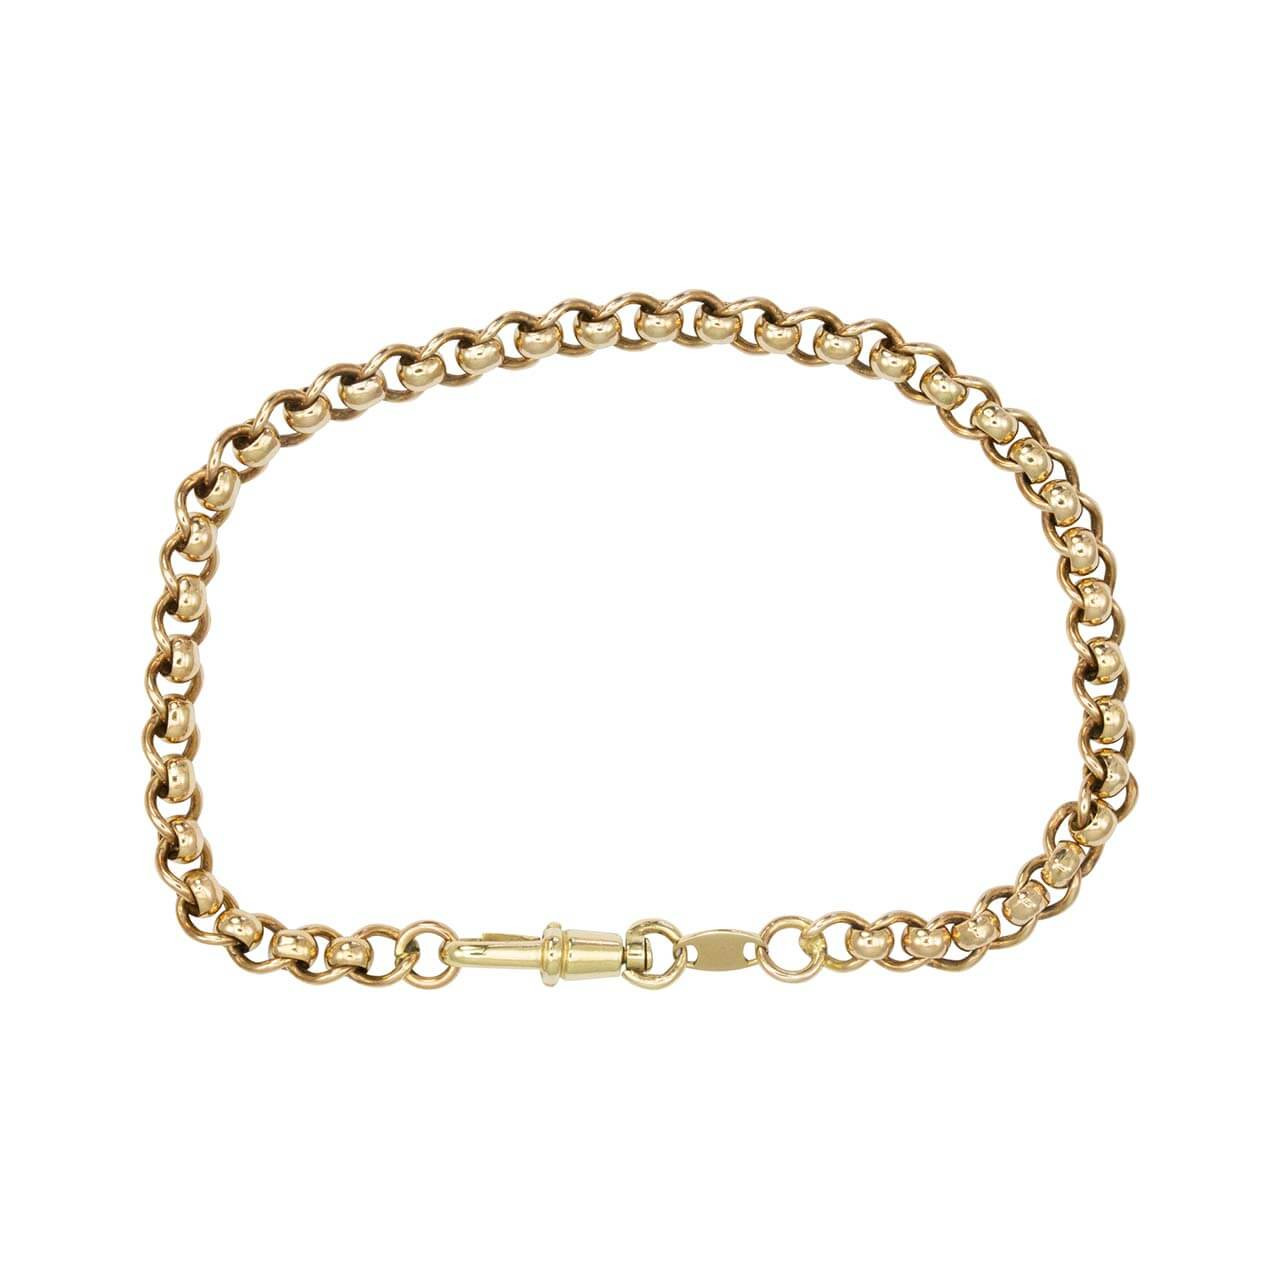 Luxury 10mm Gold Alternate Pattern Belcher Bracelet with Stones – Bling King